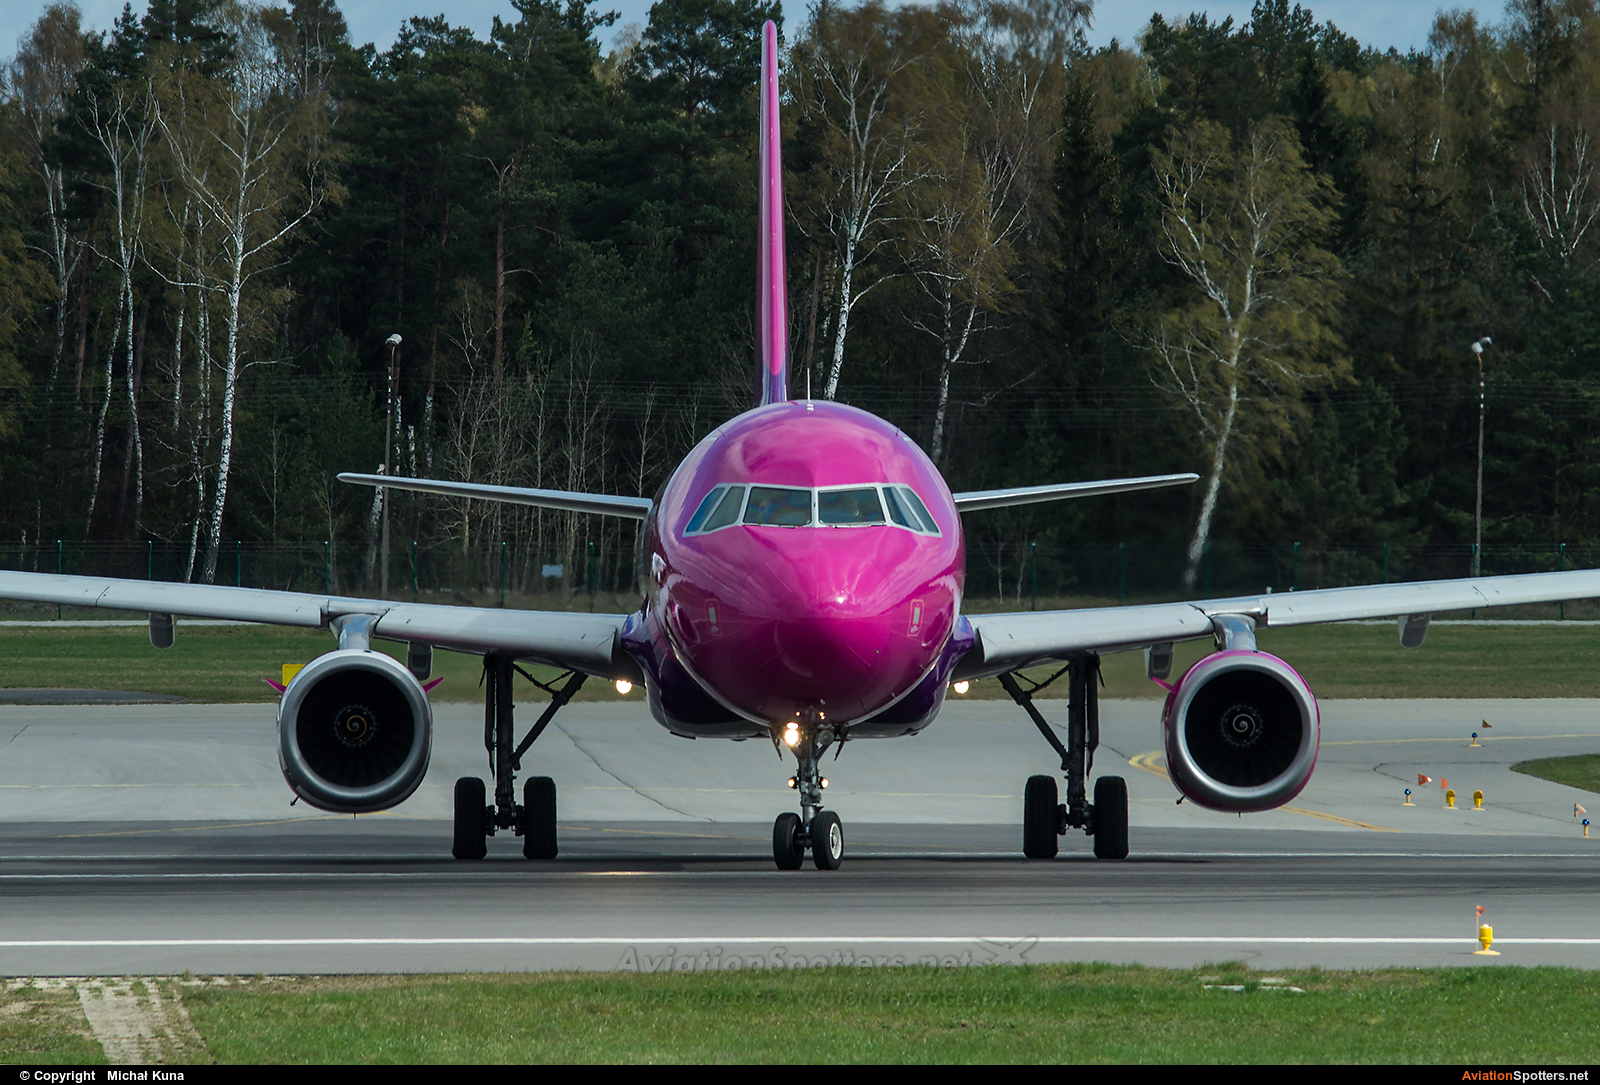 Wizz Air  -  A320-232  (HA-LPO) By Michał Kuna (big)